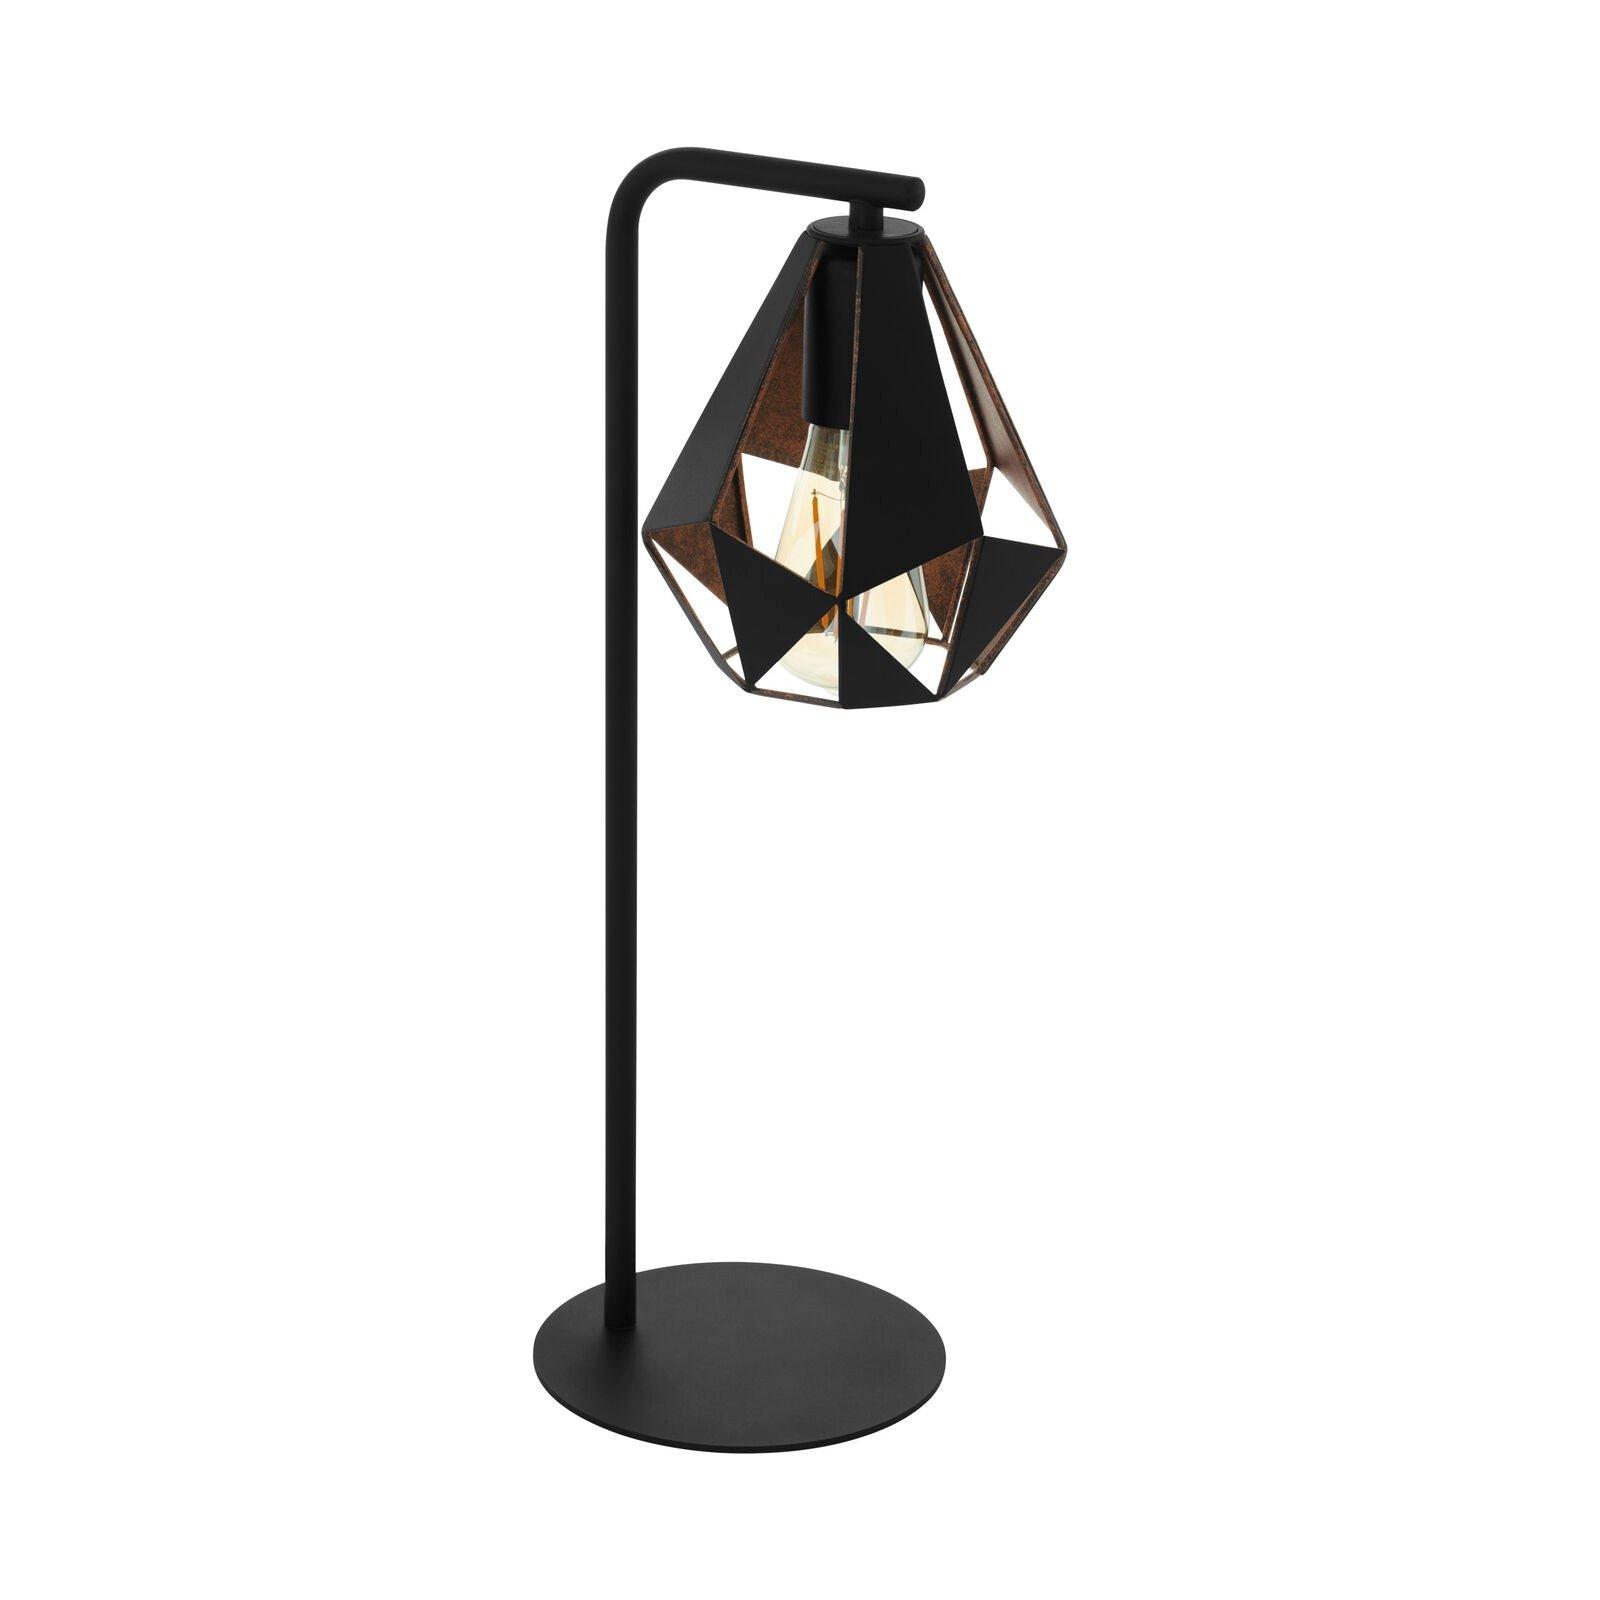 Table Lamp Desk Light Black & Antique Copper Shade Steel 1 x 60W E27 Bulb